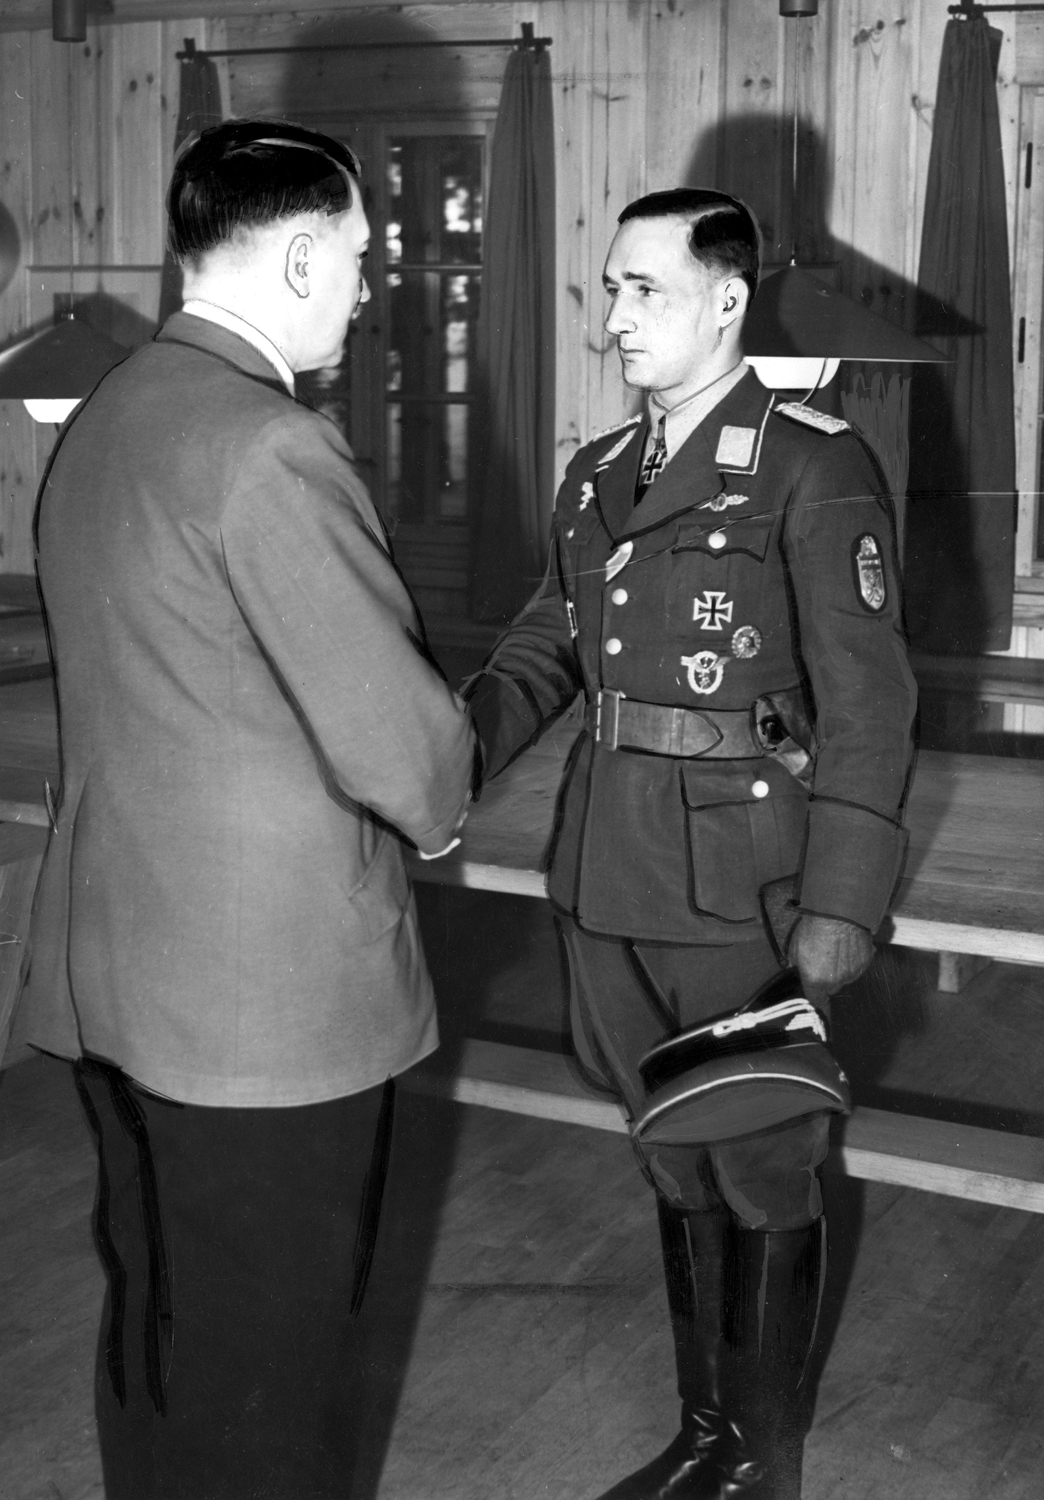 Adolf Hitler awards Gordon Gollob the Knight's Cross with Golden Oak Leaves, Swords, and Diamonds in Führerhauptquartier Werwolf  